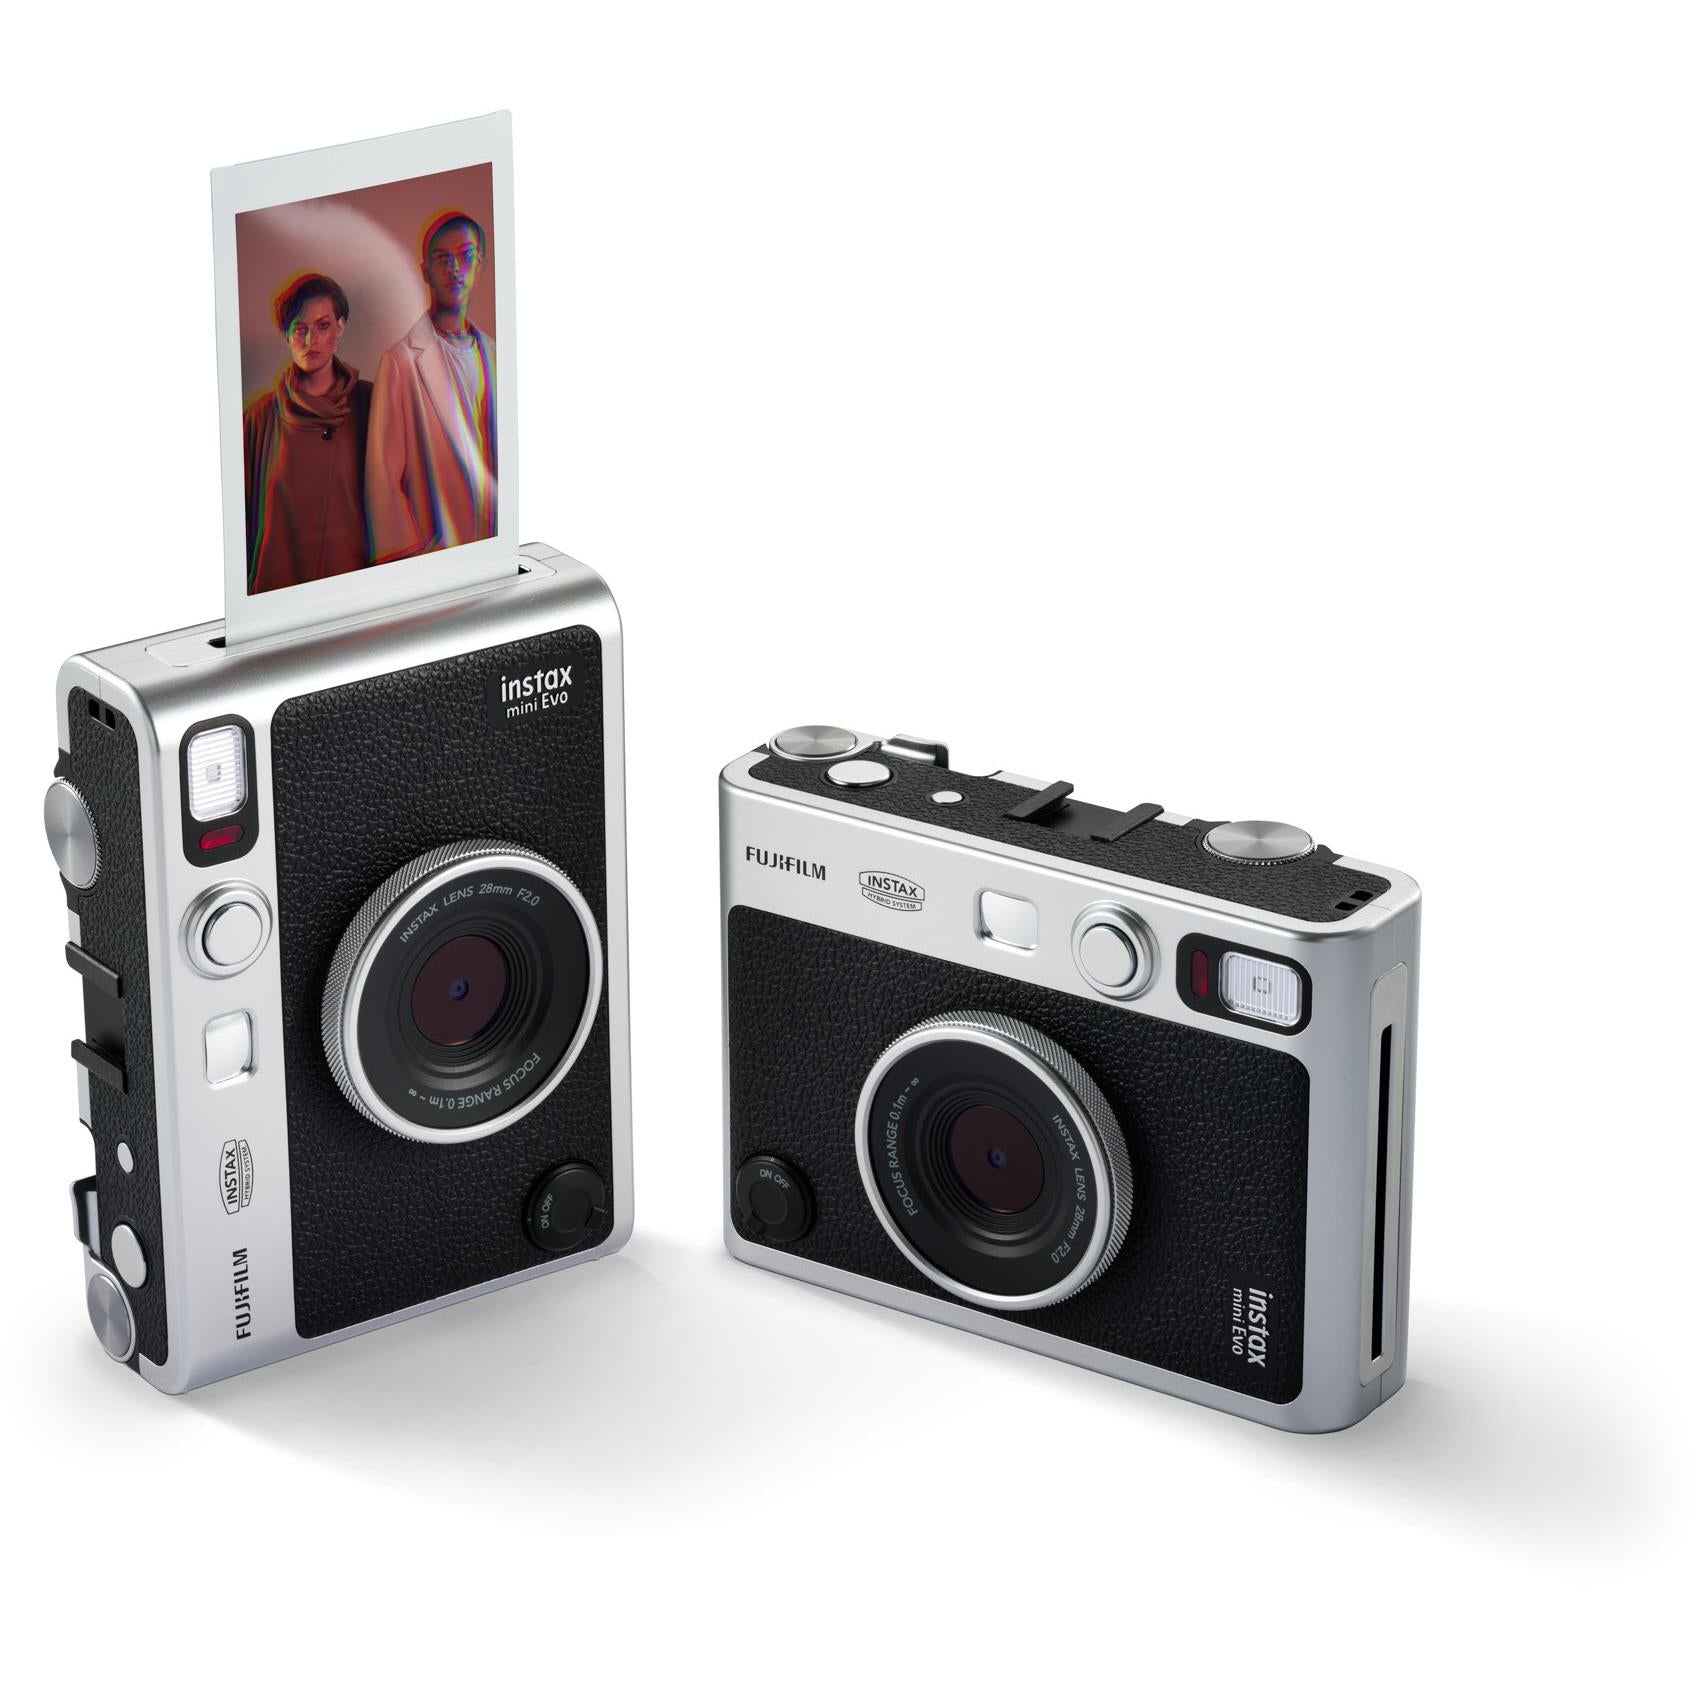 FUJIFILM Instax Mini Evo Hybrid Instant Film Camera with Built-In